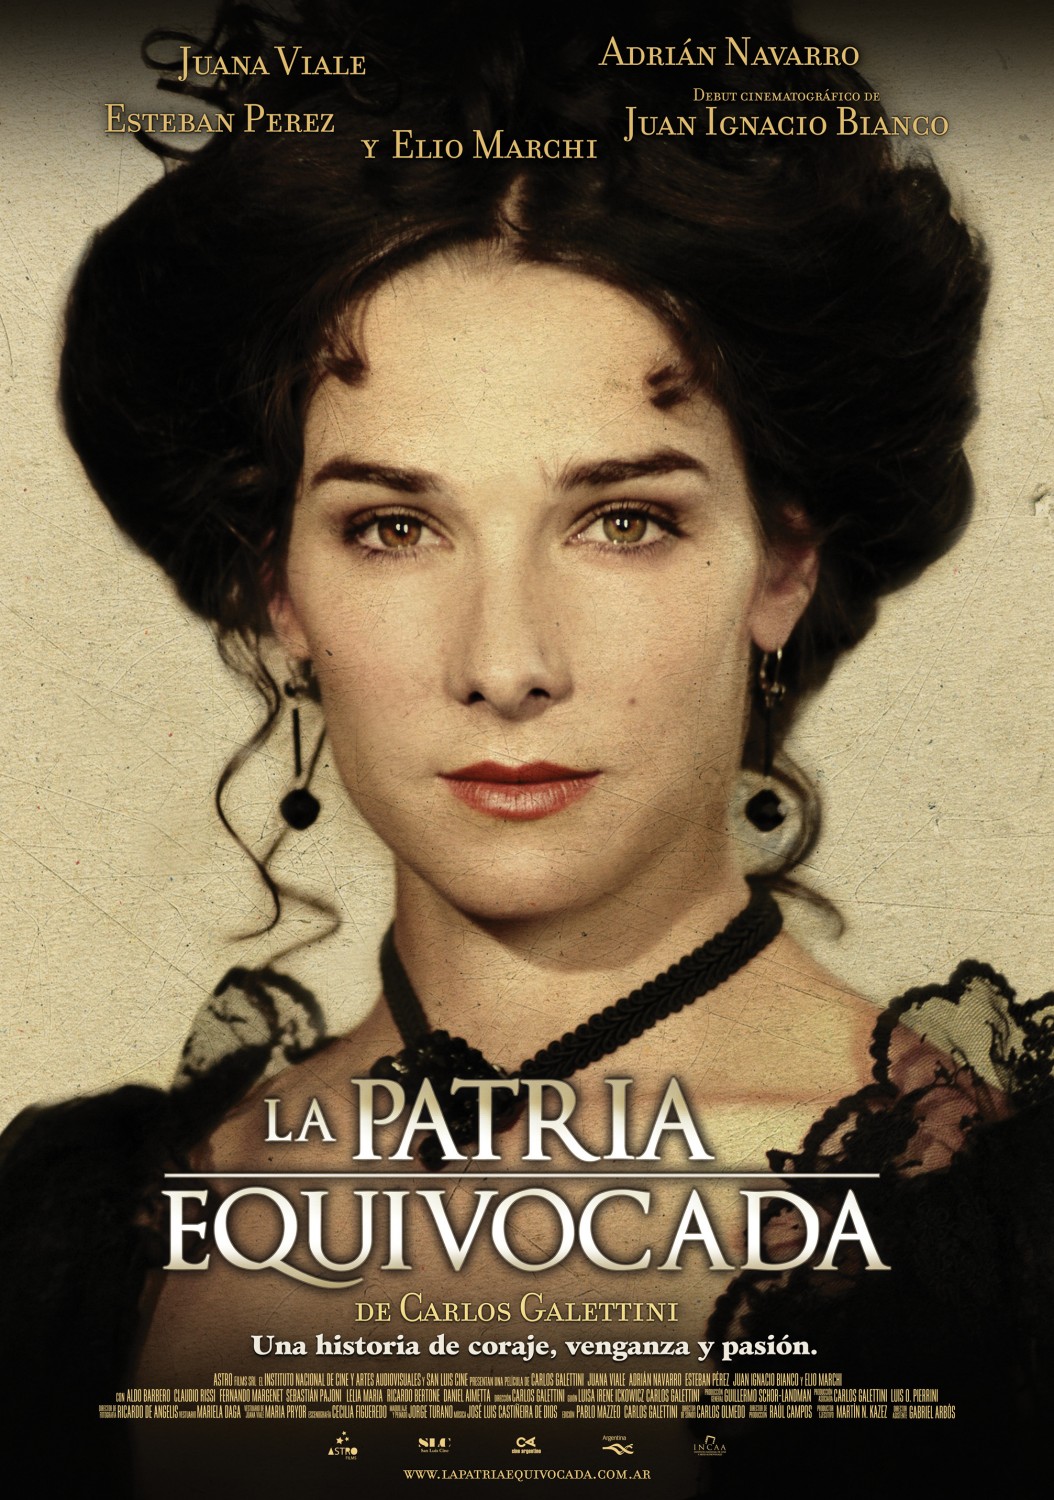 Extra Large Movie Poster Image for La patria equivocada 